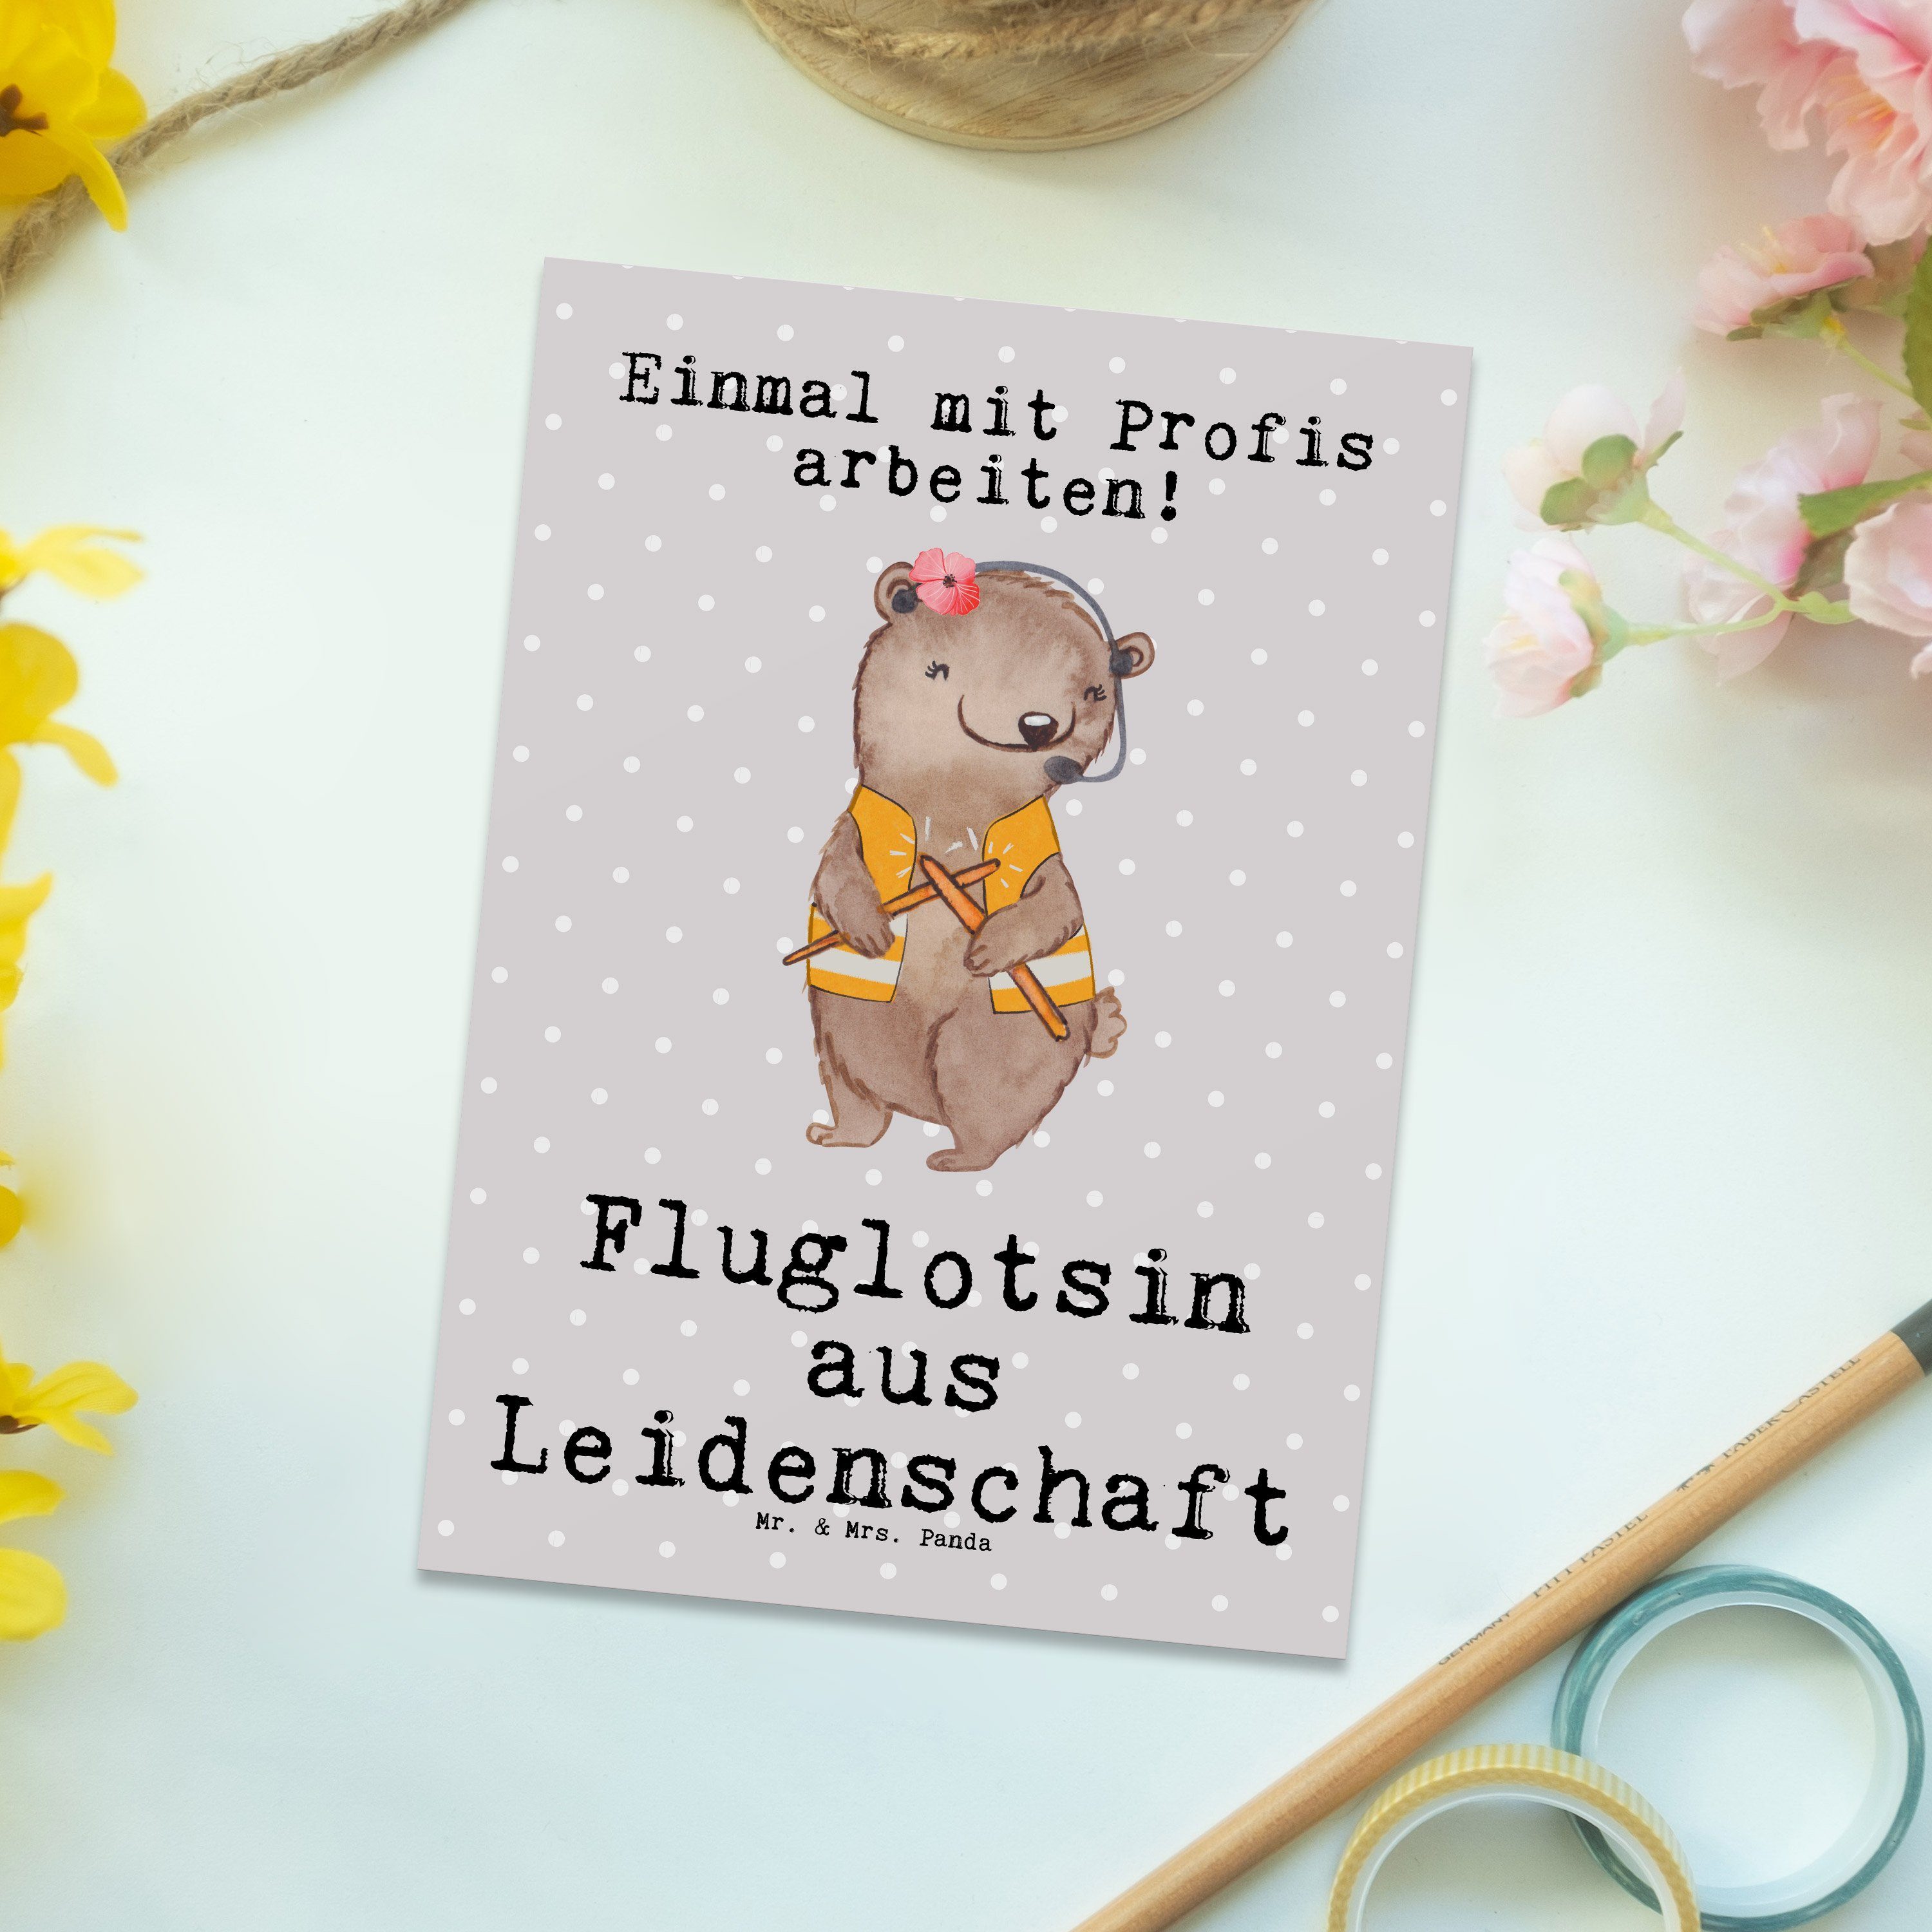 Mr. & Mrs. Panda Flug Kollegin, - Postkarte aus Fluglotsin - Leidenschaft Grau Geschenk, Pastell